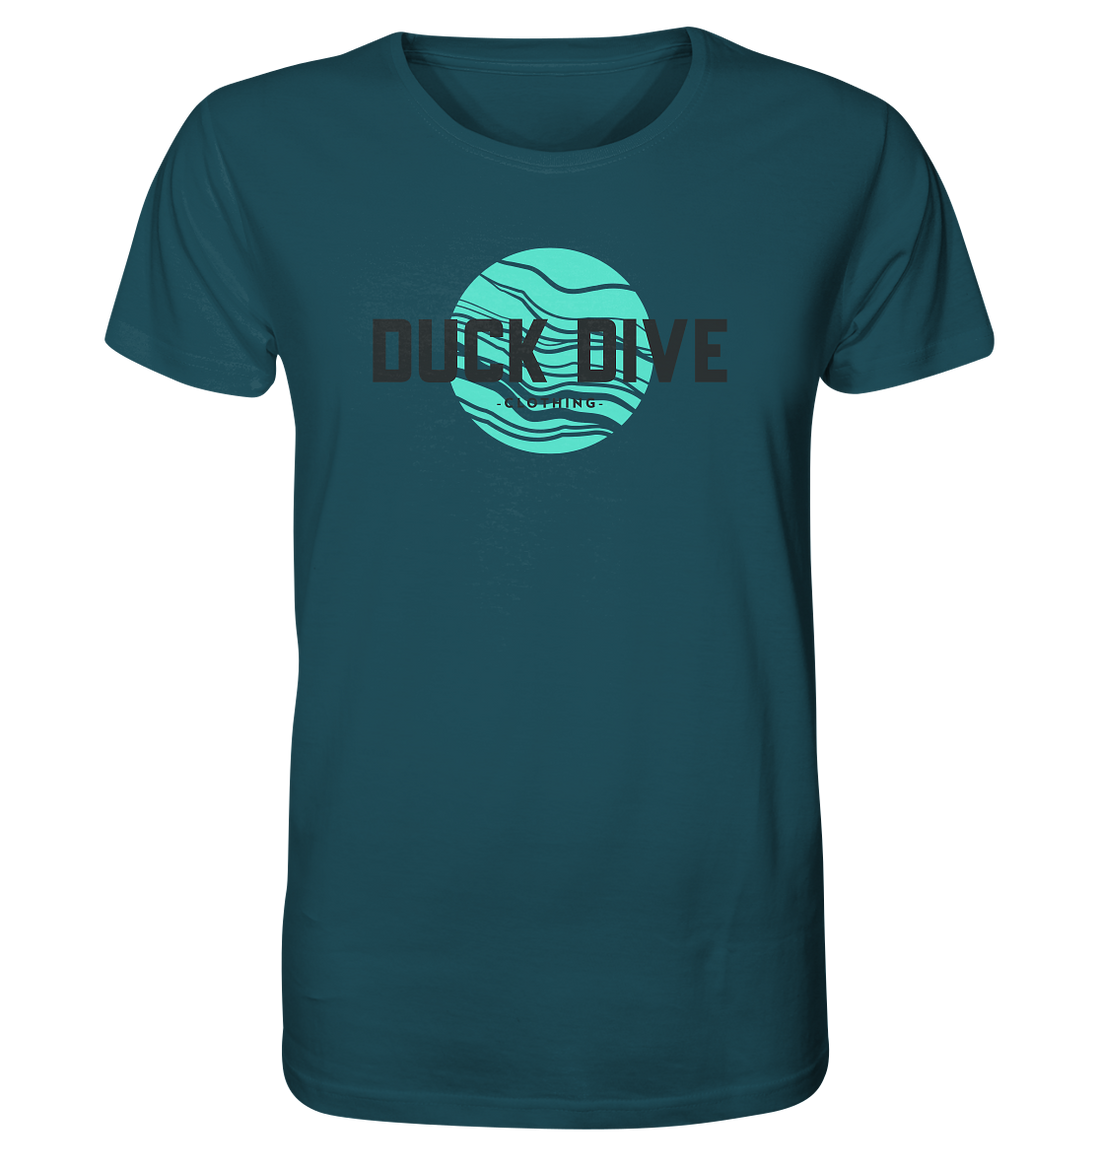 Shirt - Circule Waves - Organic Shirt - Duck Dive Clothing